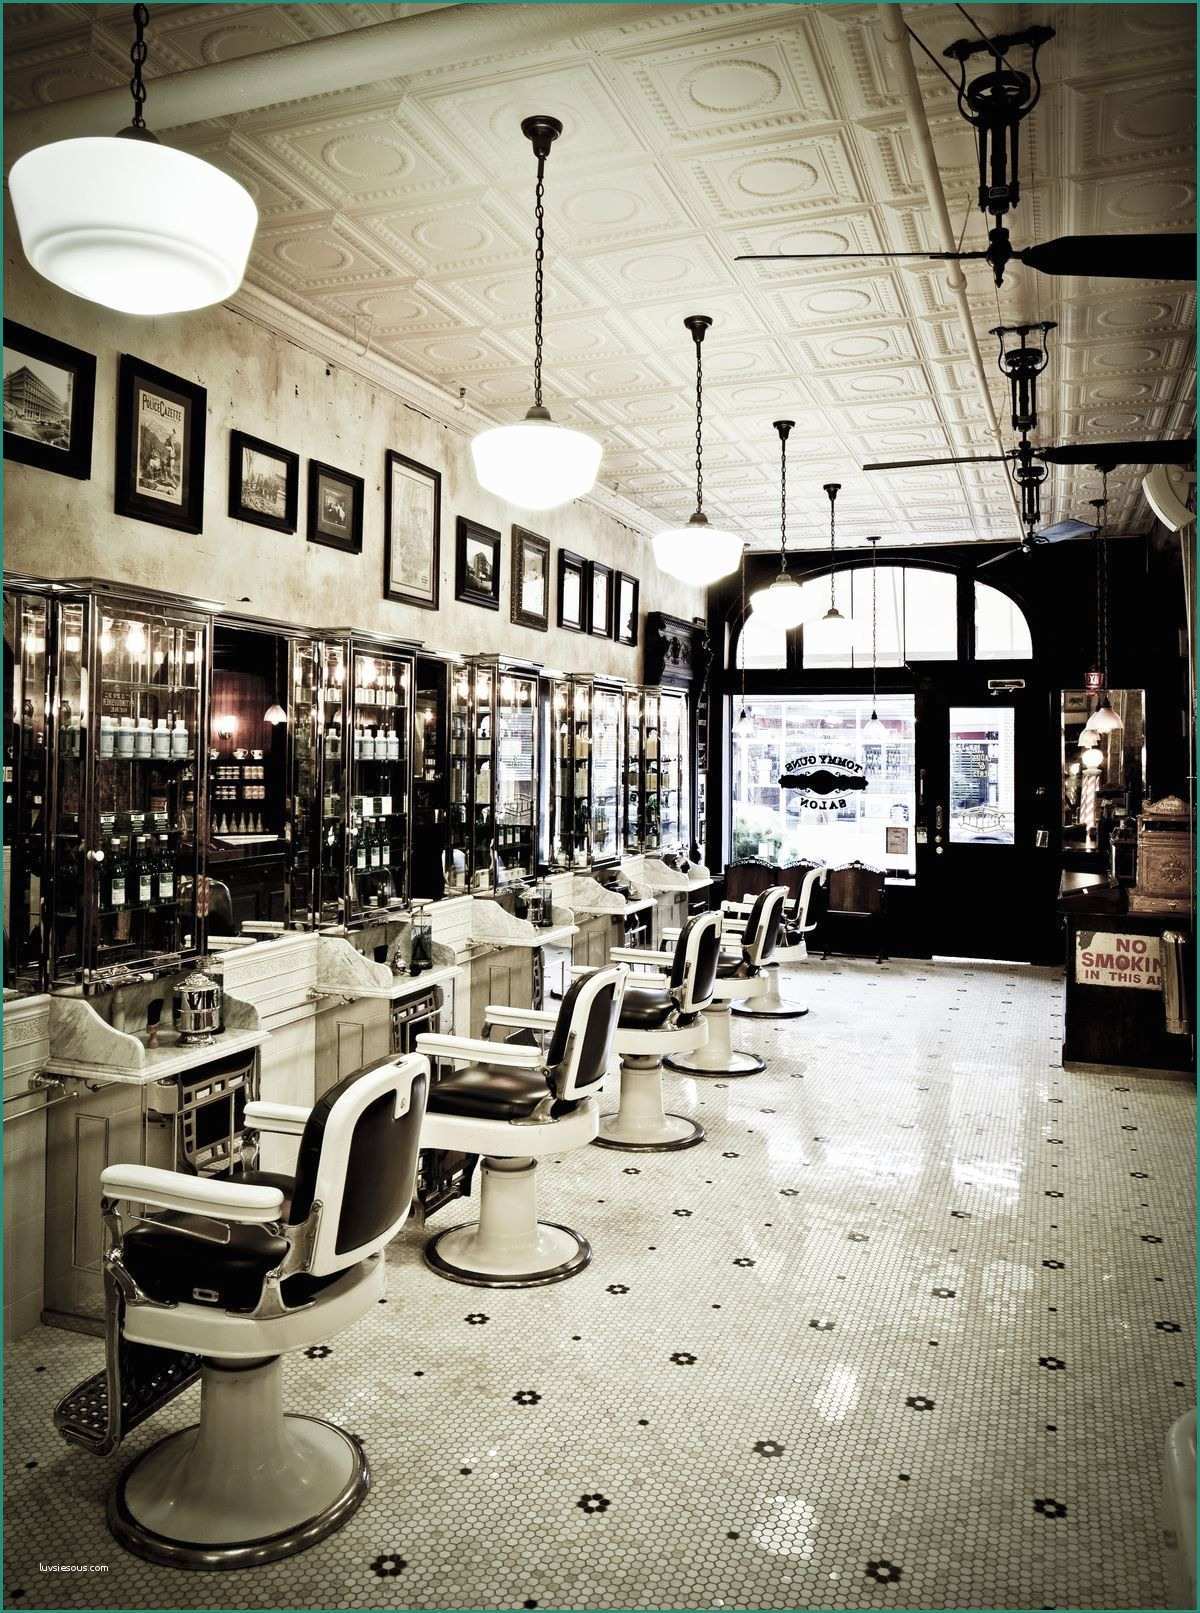 Arredamento Barber Shop E Pin by Black Kane On Salons Barber Shops In 2018